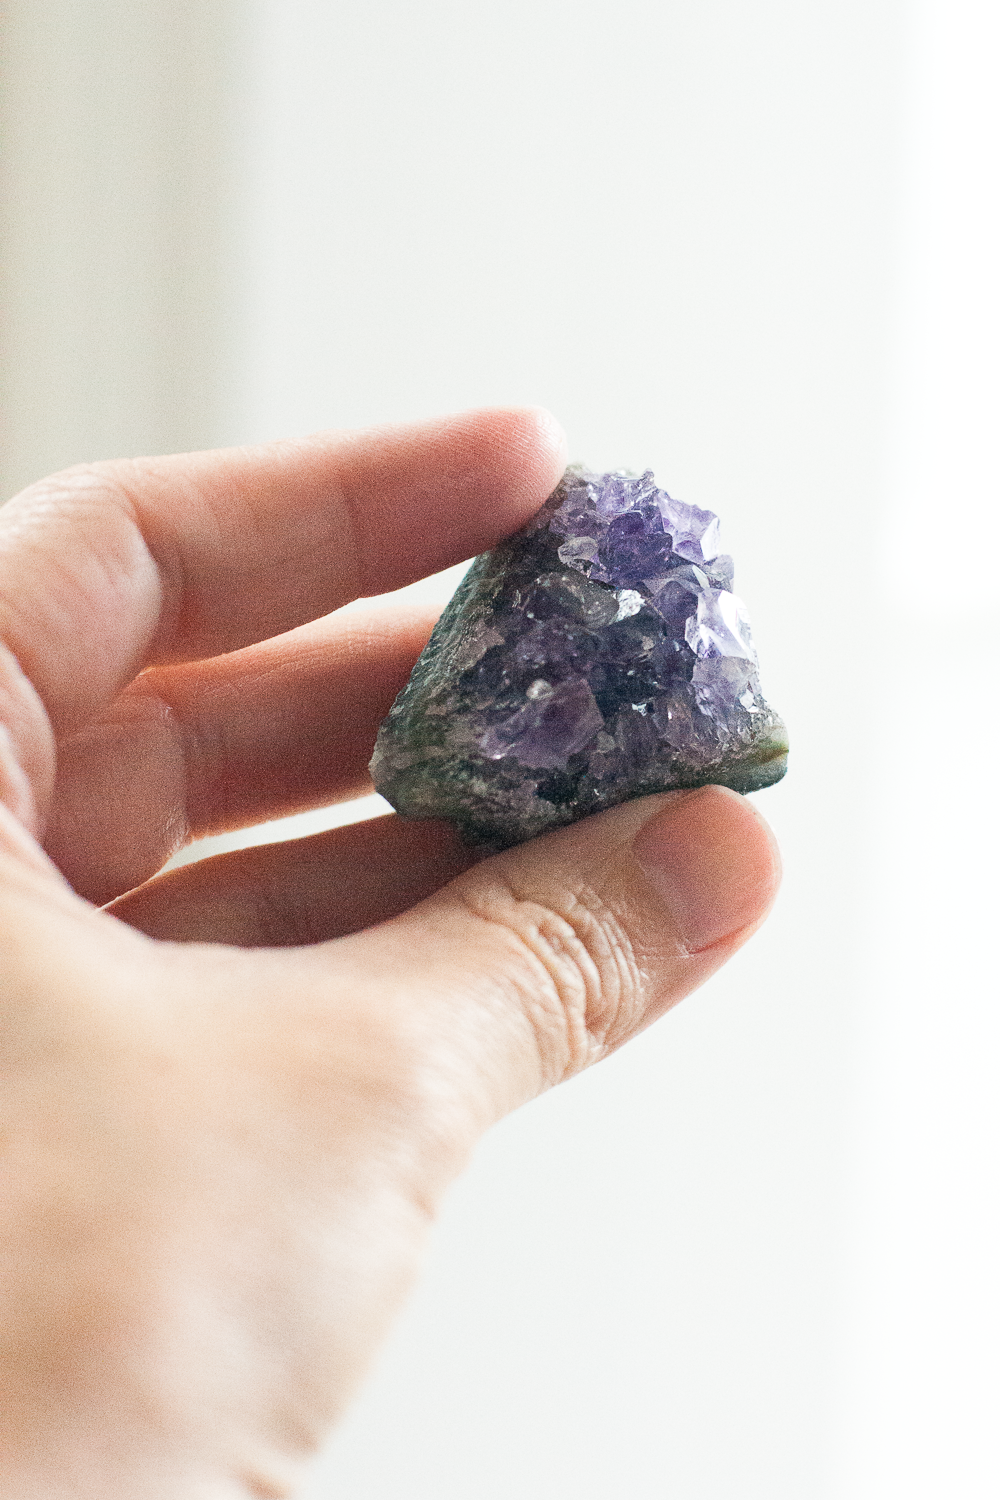 Amethyst Stone Crystal, Energy, Positive Energy - Gather Goods Co - Raleigh, NC